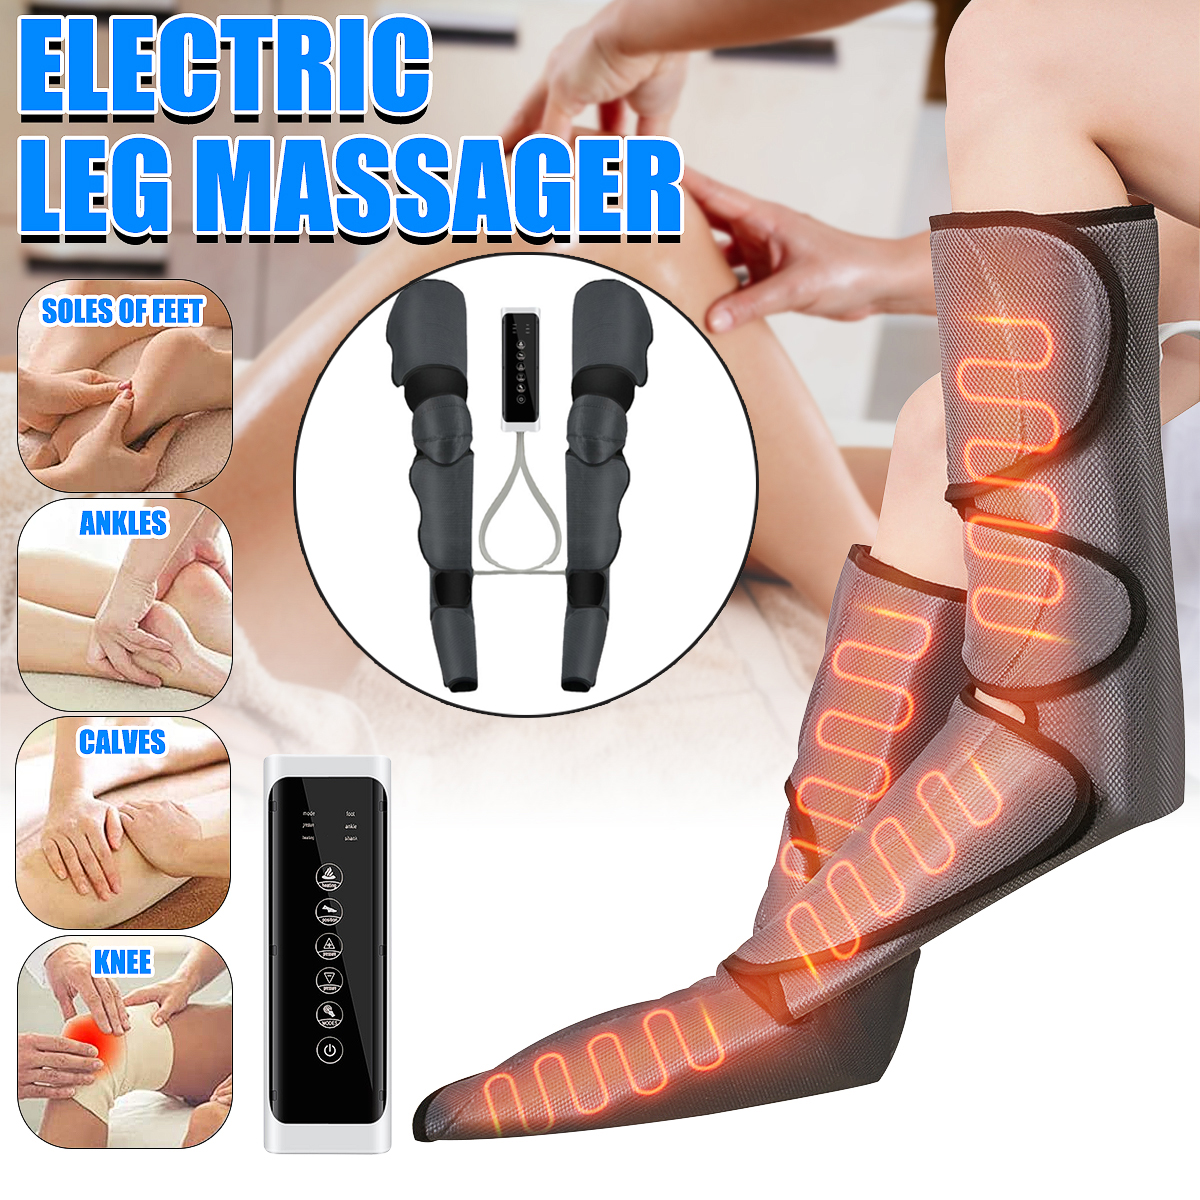 Household-Electric-Leg-Massager-Pneumatic-Three-gear-Air-Wave-Hot-Compress-Beauty-Device-Knee-Calf-M-1933124-1